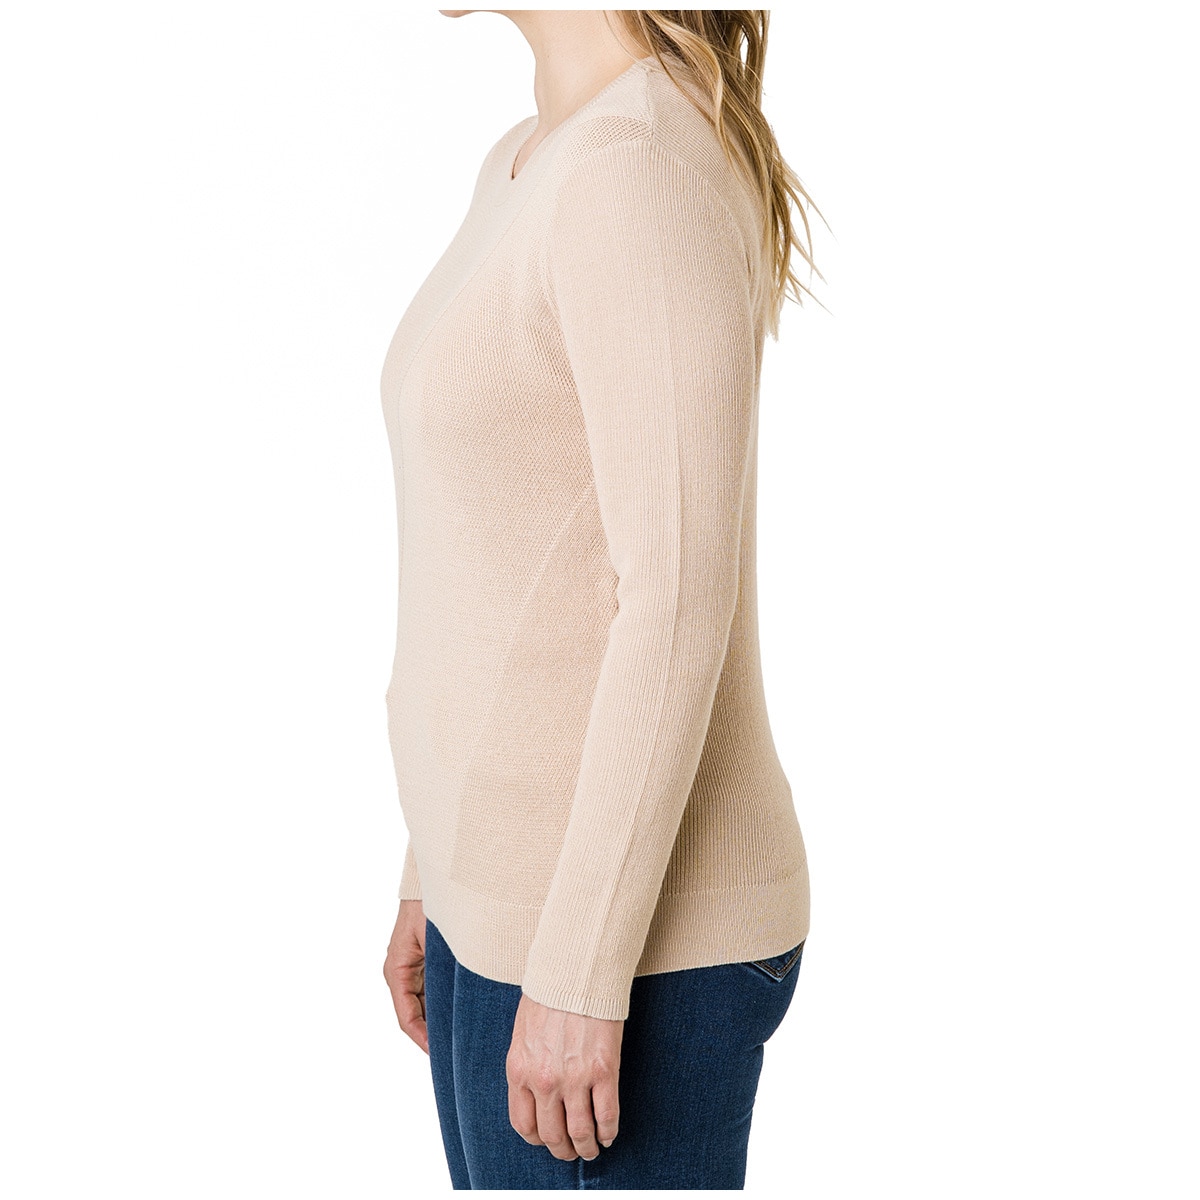 Seg'ments Women's Textured Sweater - Oatmeal